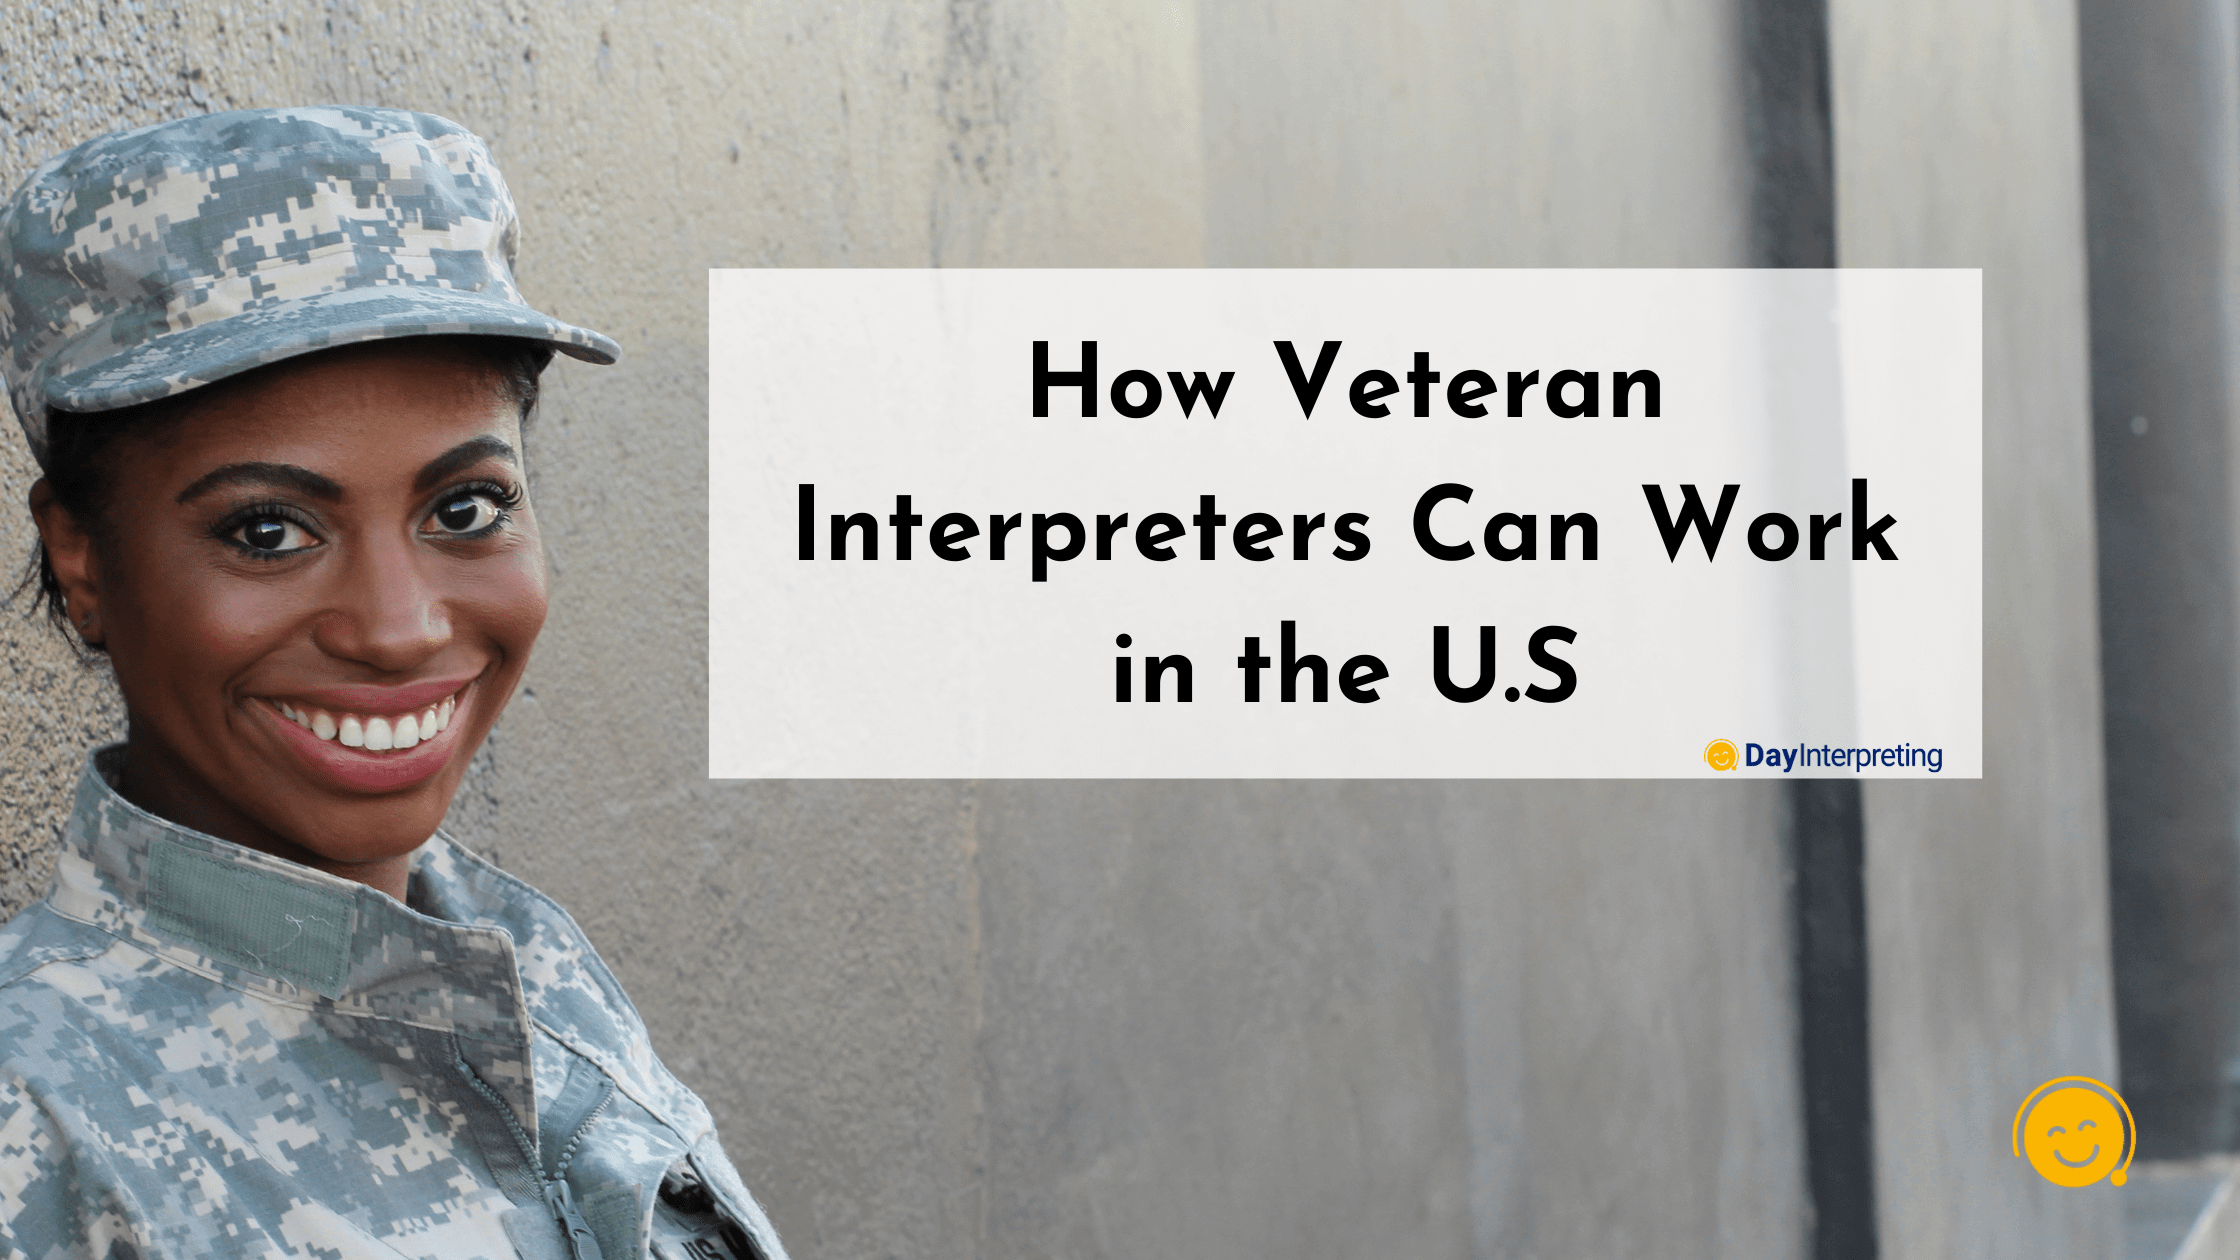 How Veteran Interpreters Can Work in the U.S